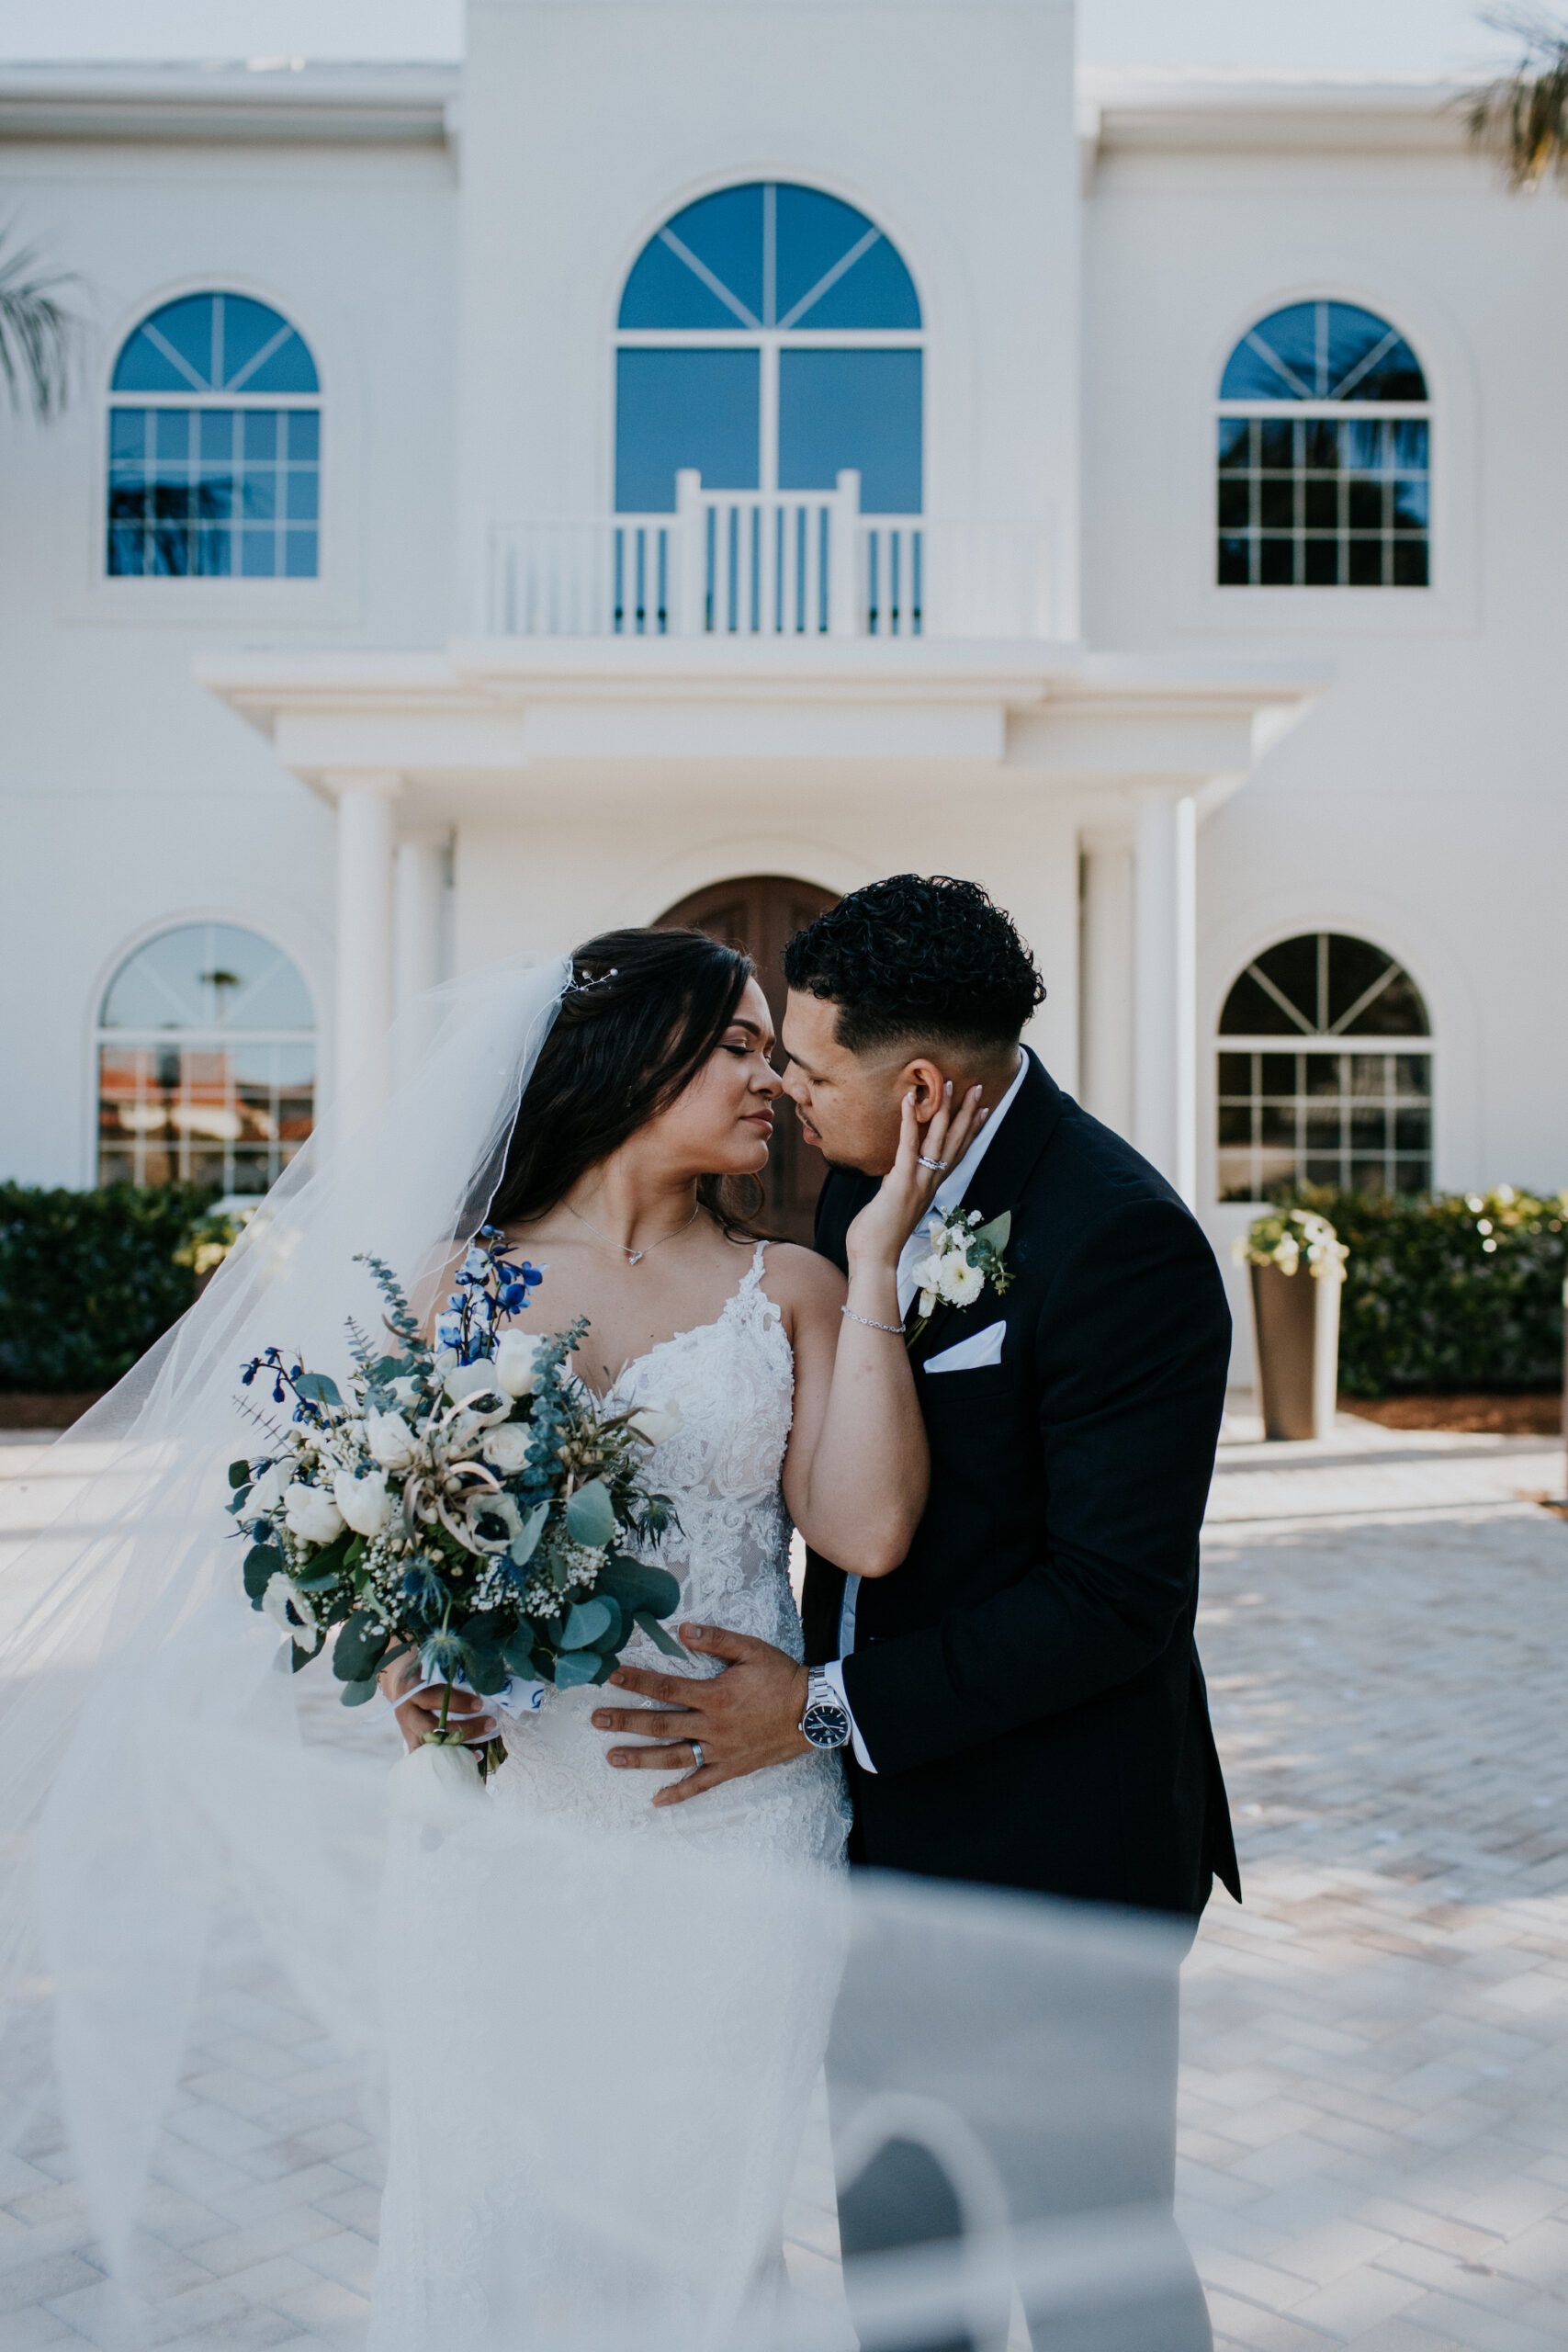 Intimate Bride and Groom Veil Wedding Portrait | Tampa Bay Wedding Videographer Shannon Kelly Films